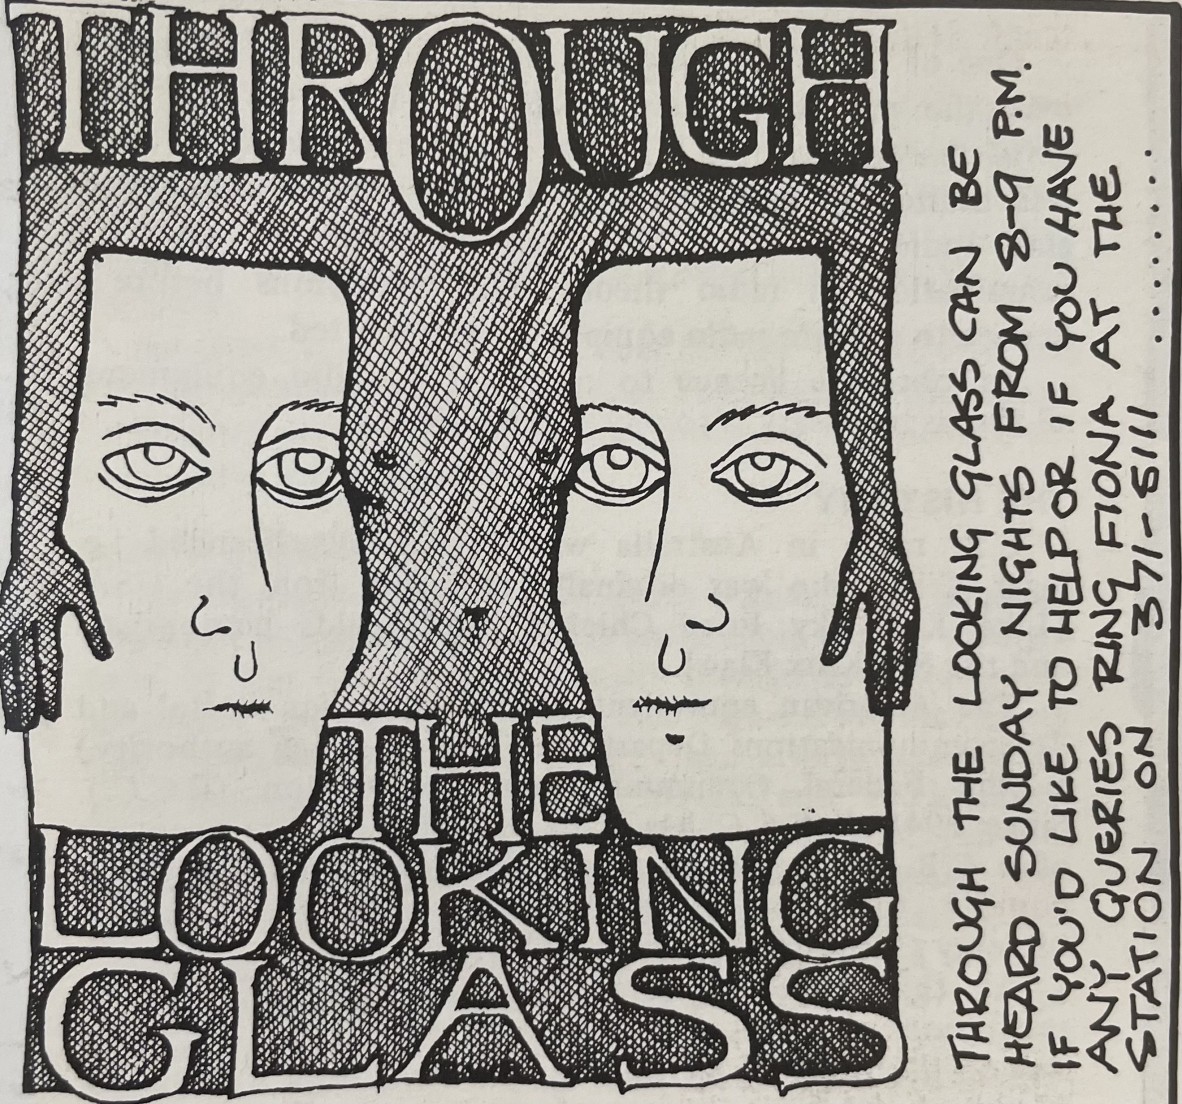 Through the Looking Glass artwork circa 1977.